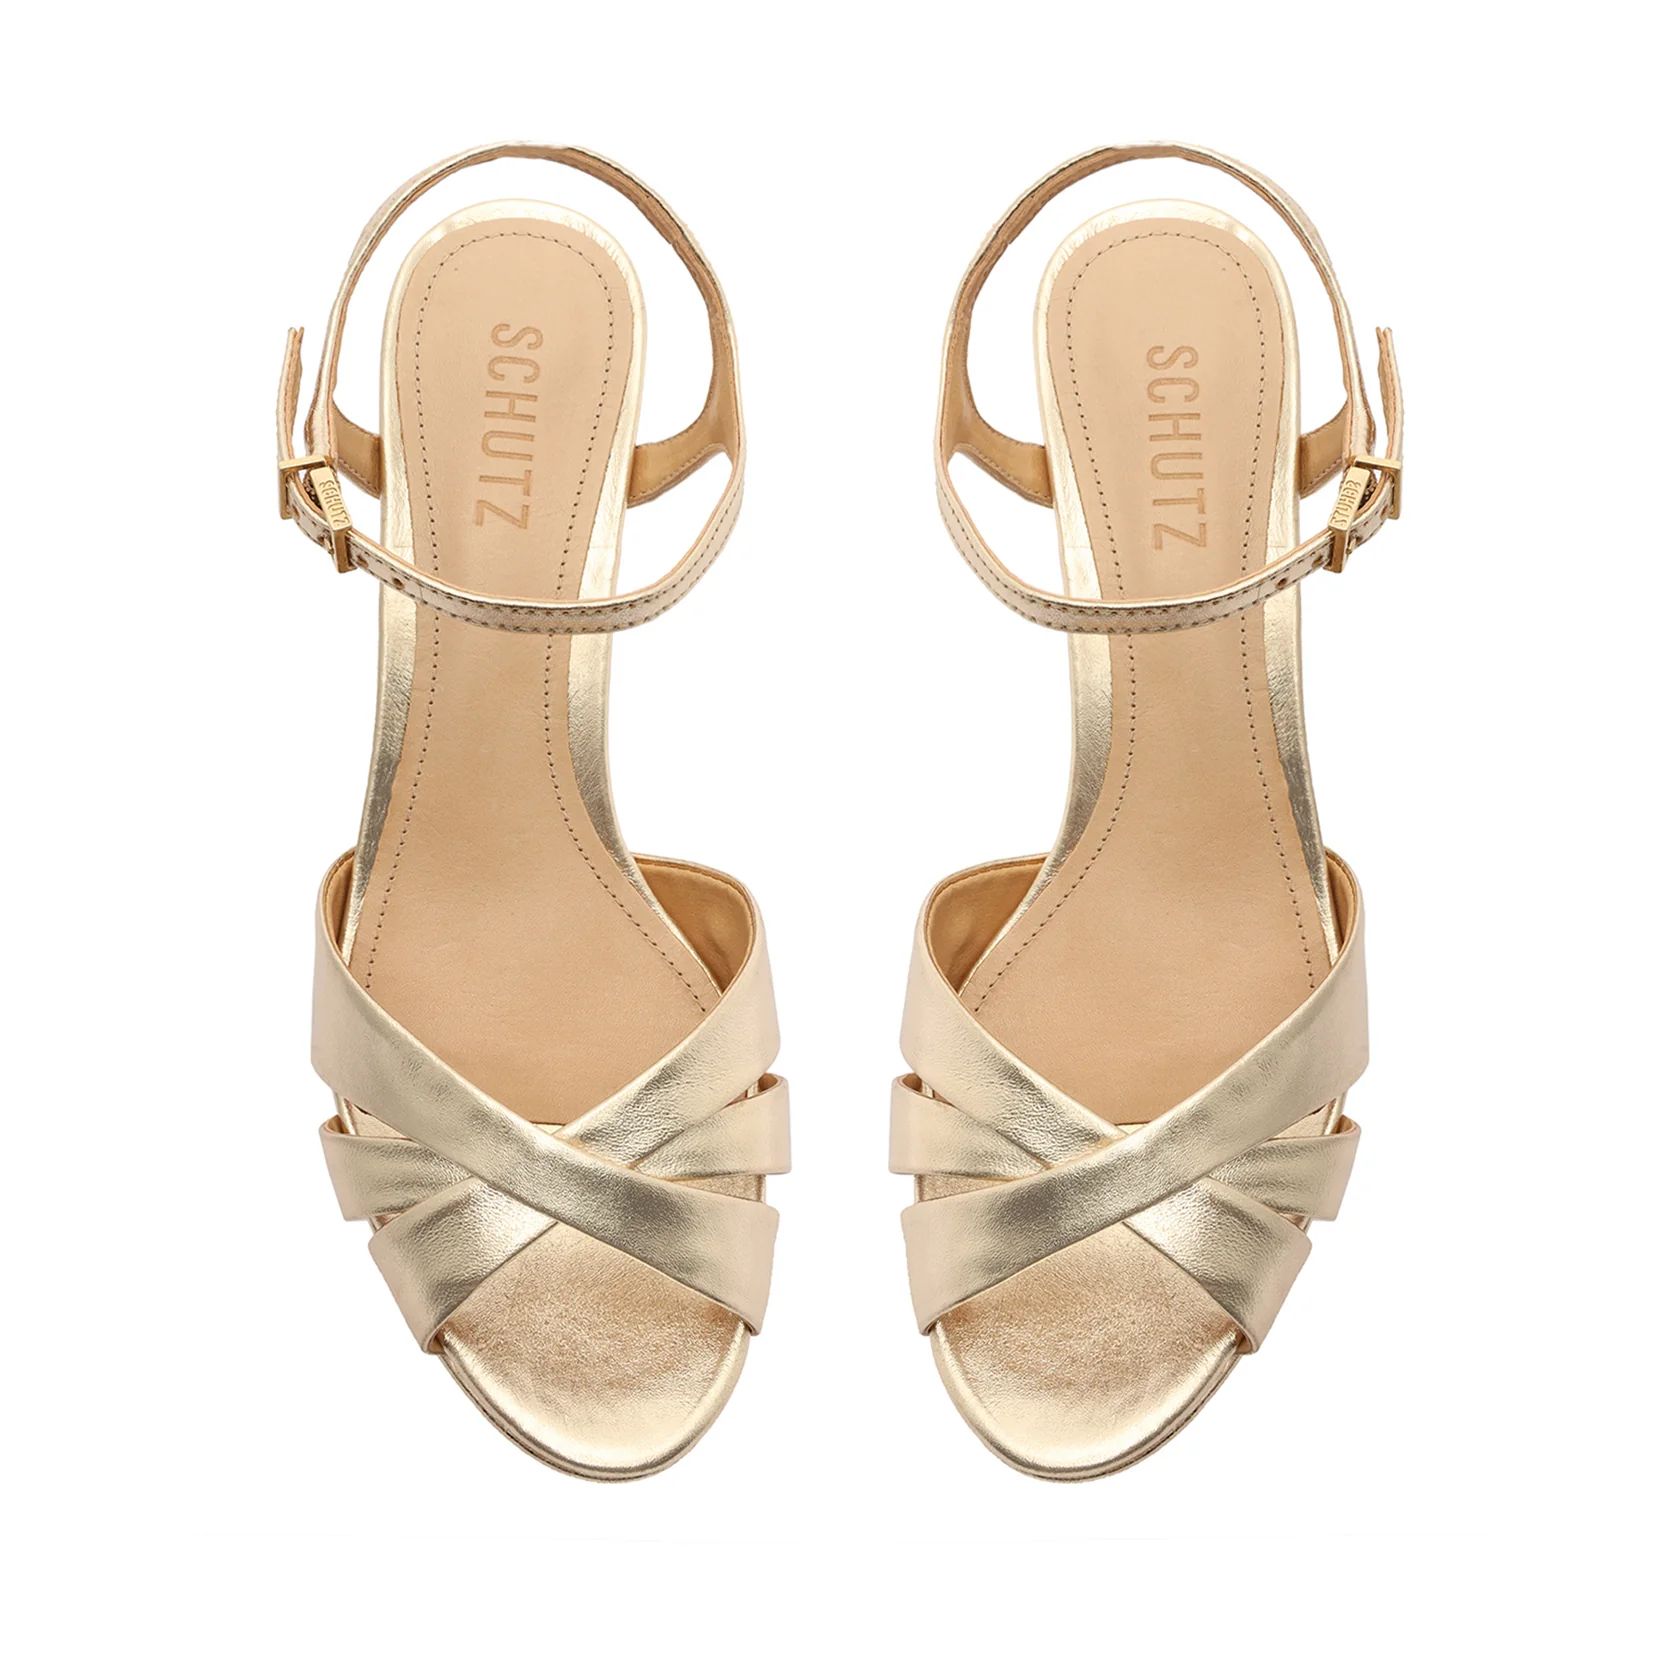 Keefa Sandal: Disco Glamour Shoe | Schutz | Schutz Shoes (US)